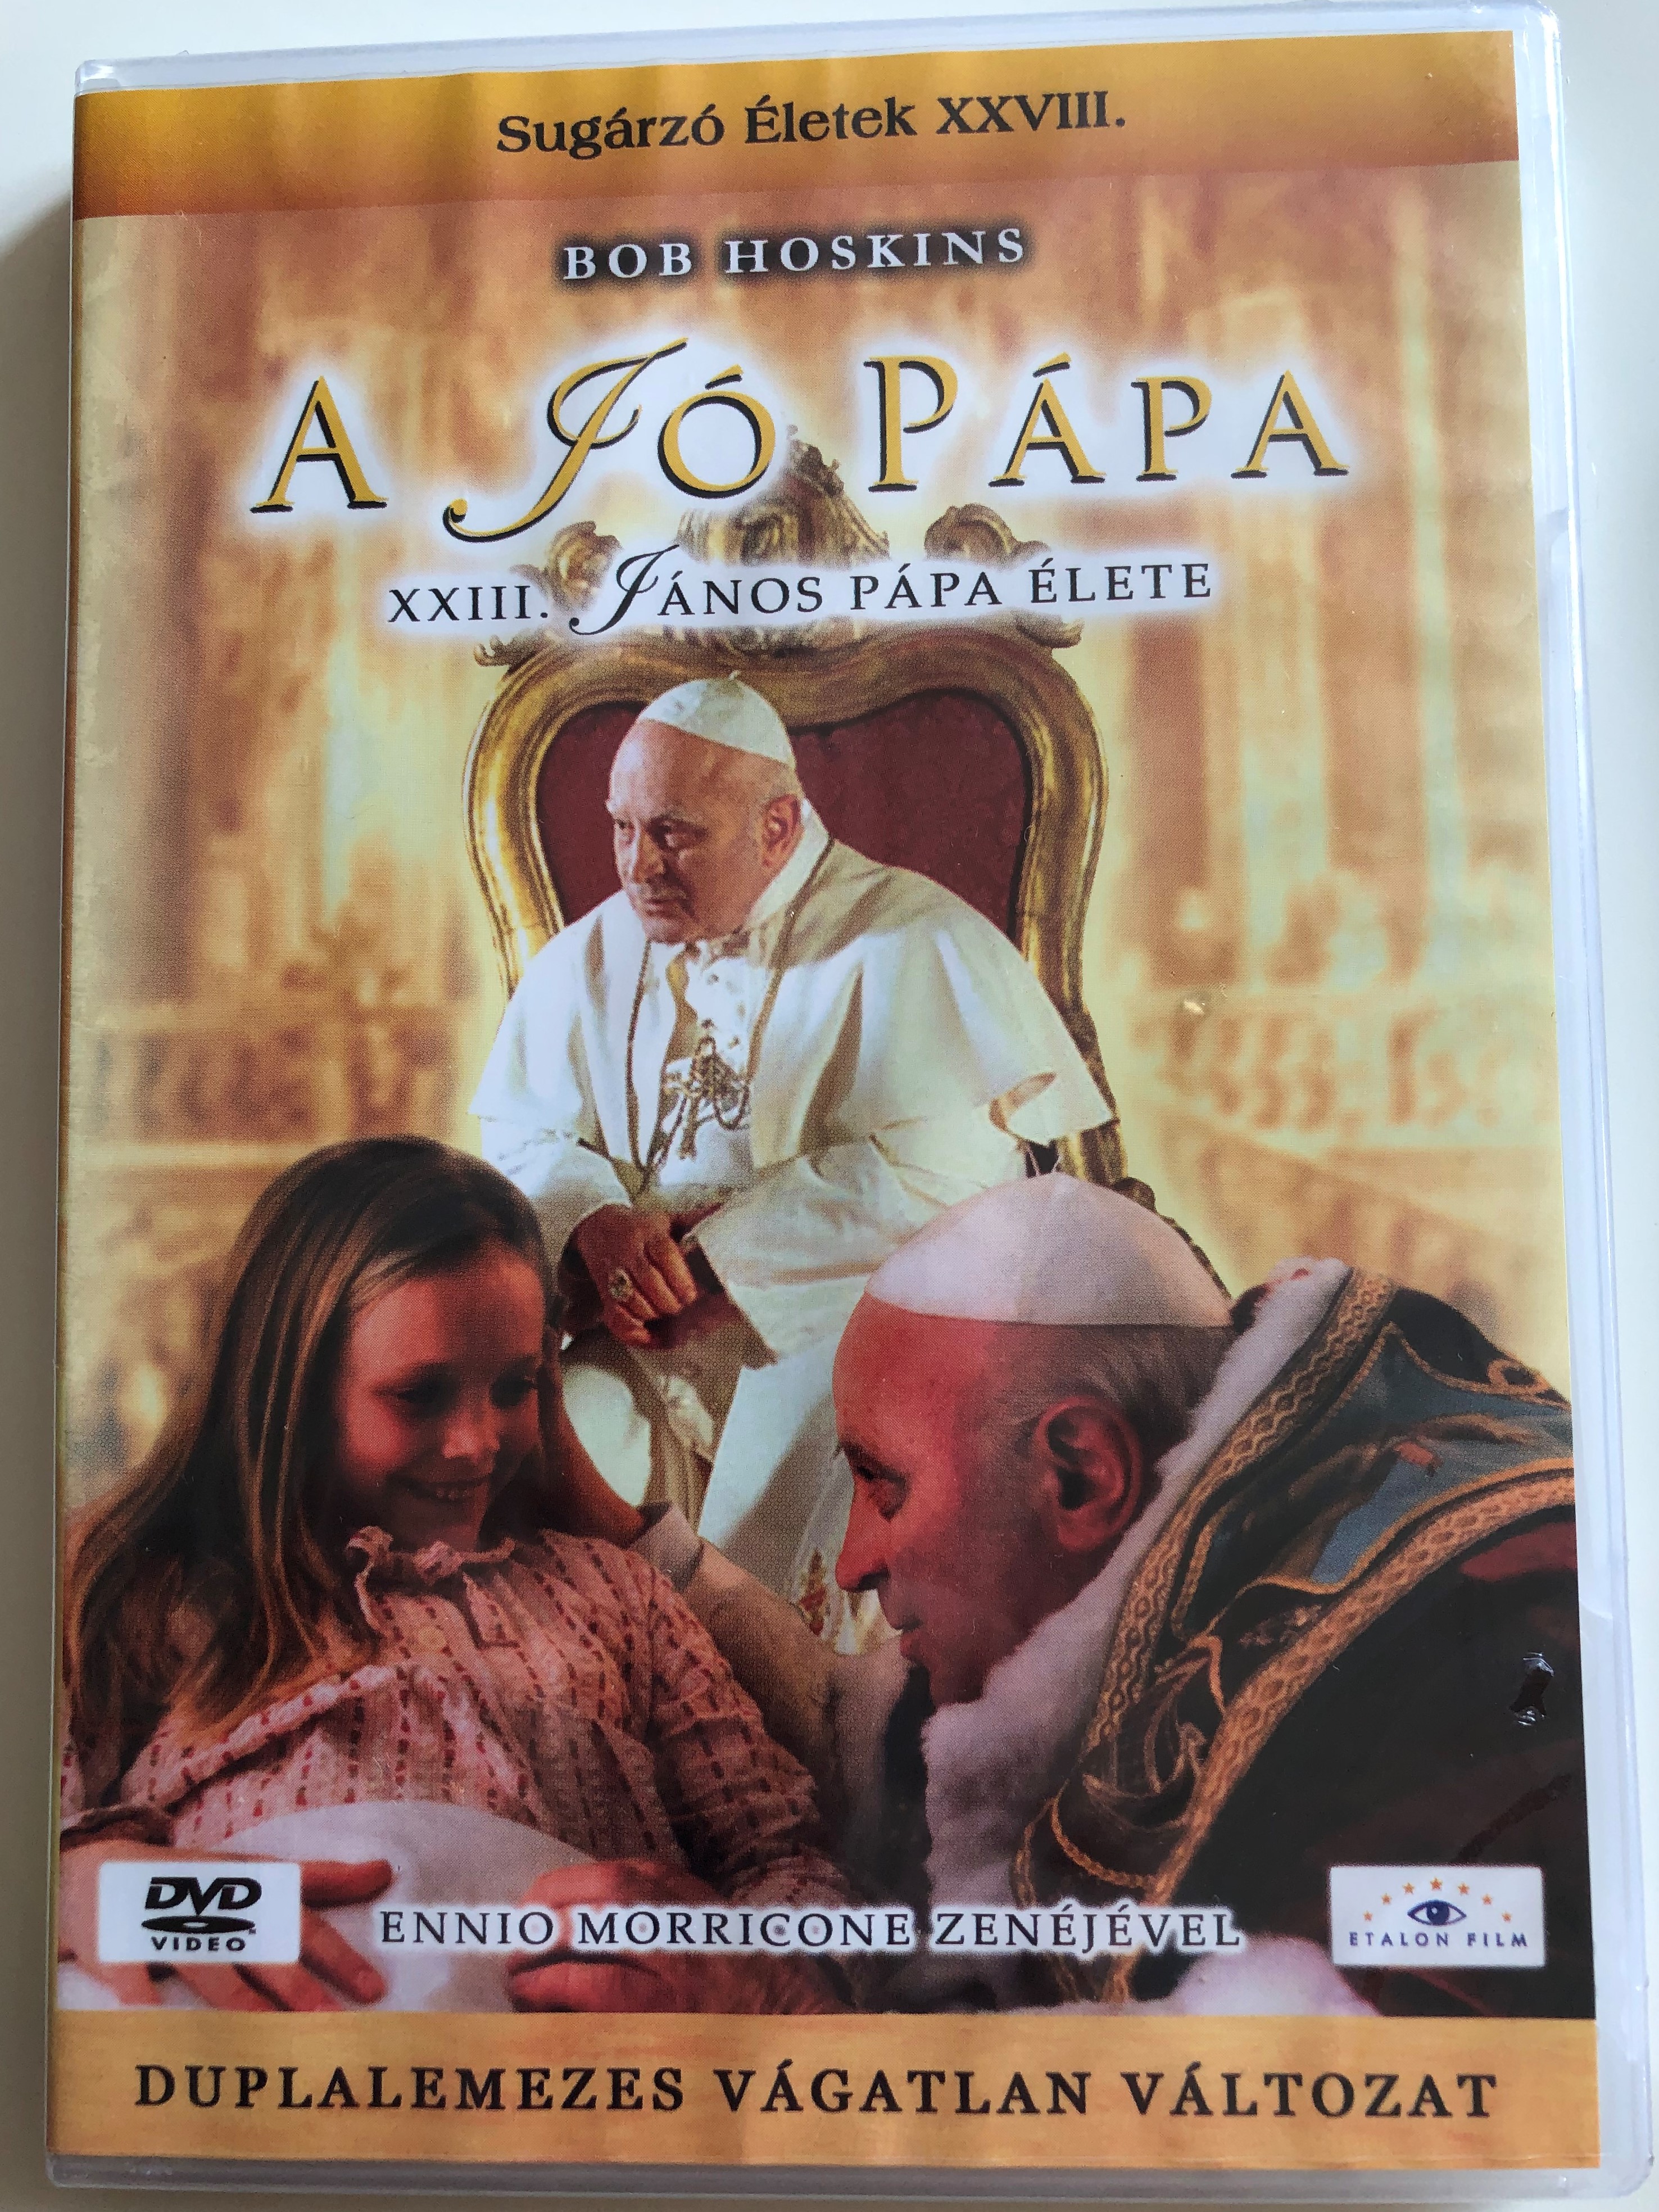 -il-papa-buono-dvd-2003-a-j-p-pa-the-good-pope-directed-by-ricky-tognazzi-starring-bob-hoskins-carlo-cecchi-roberto-citran-fabrizio-vidale-sergio-bini-bustric-1-.jpg